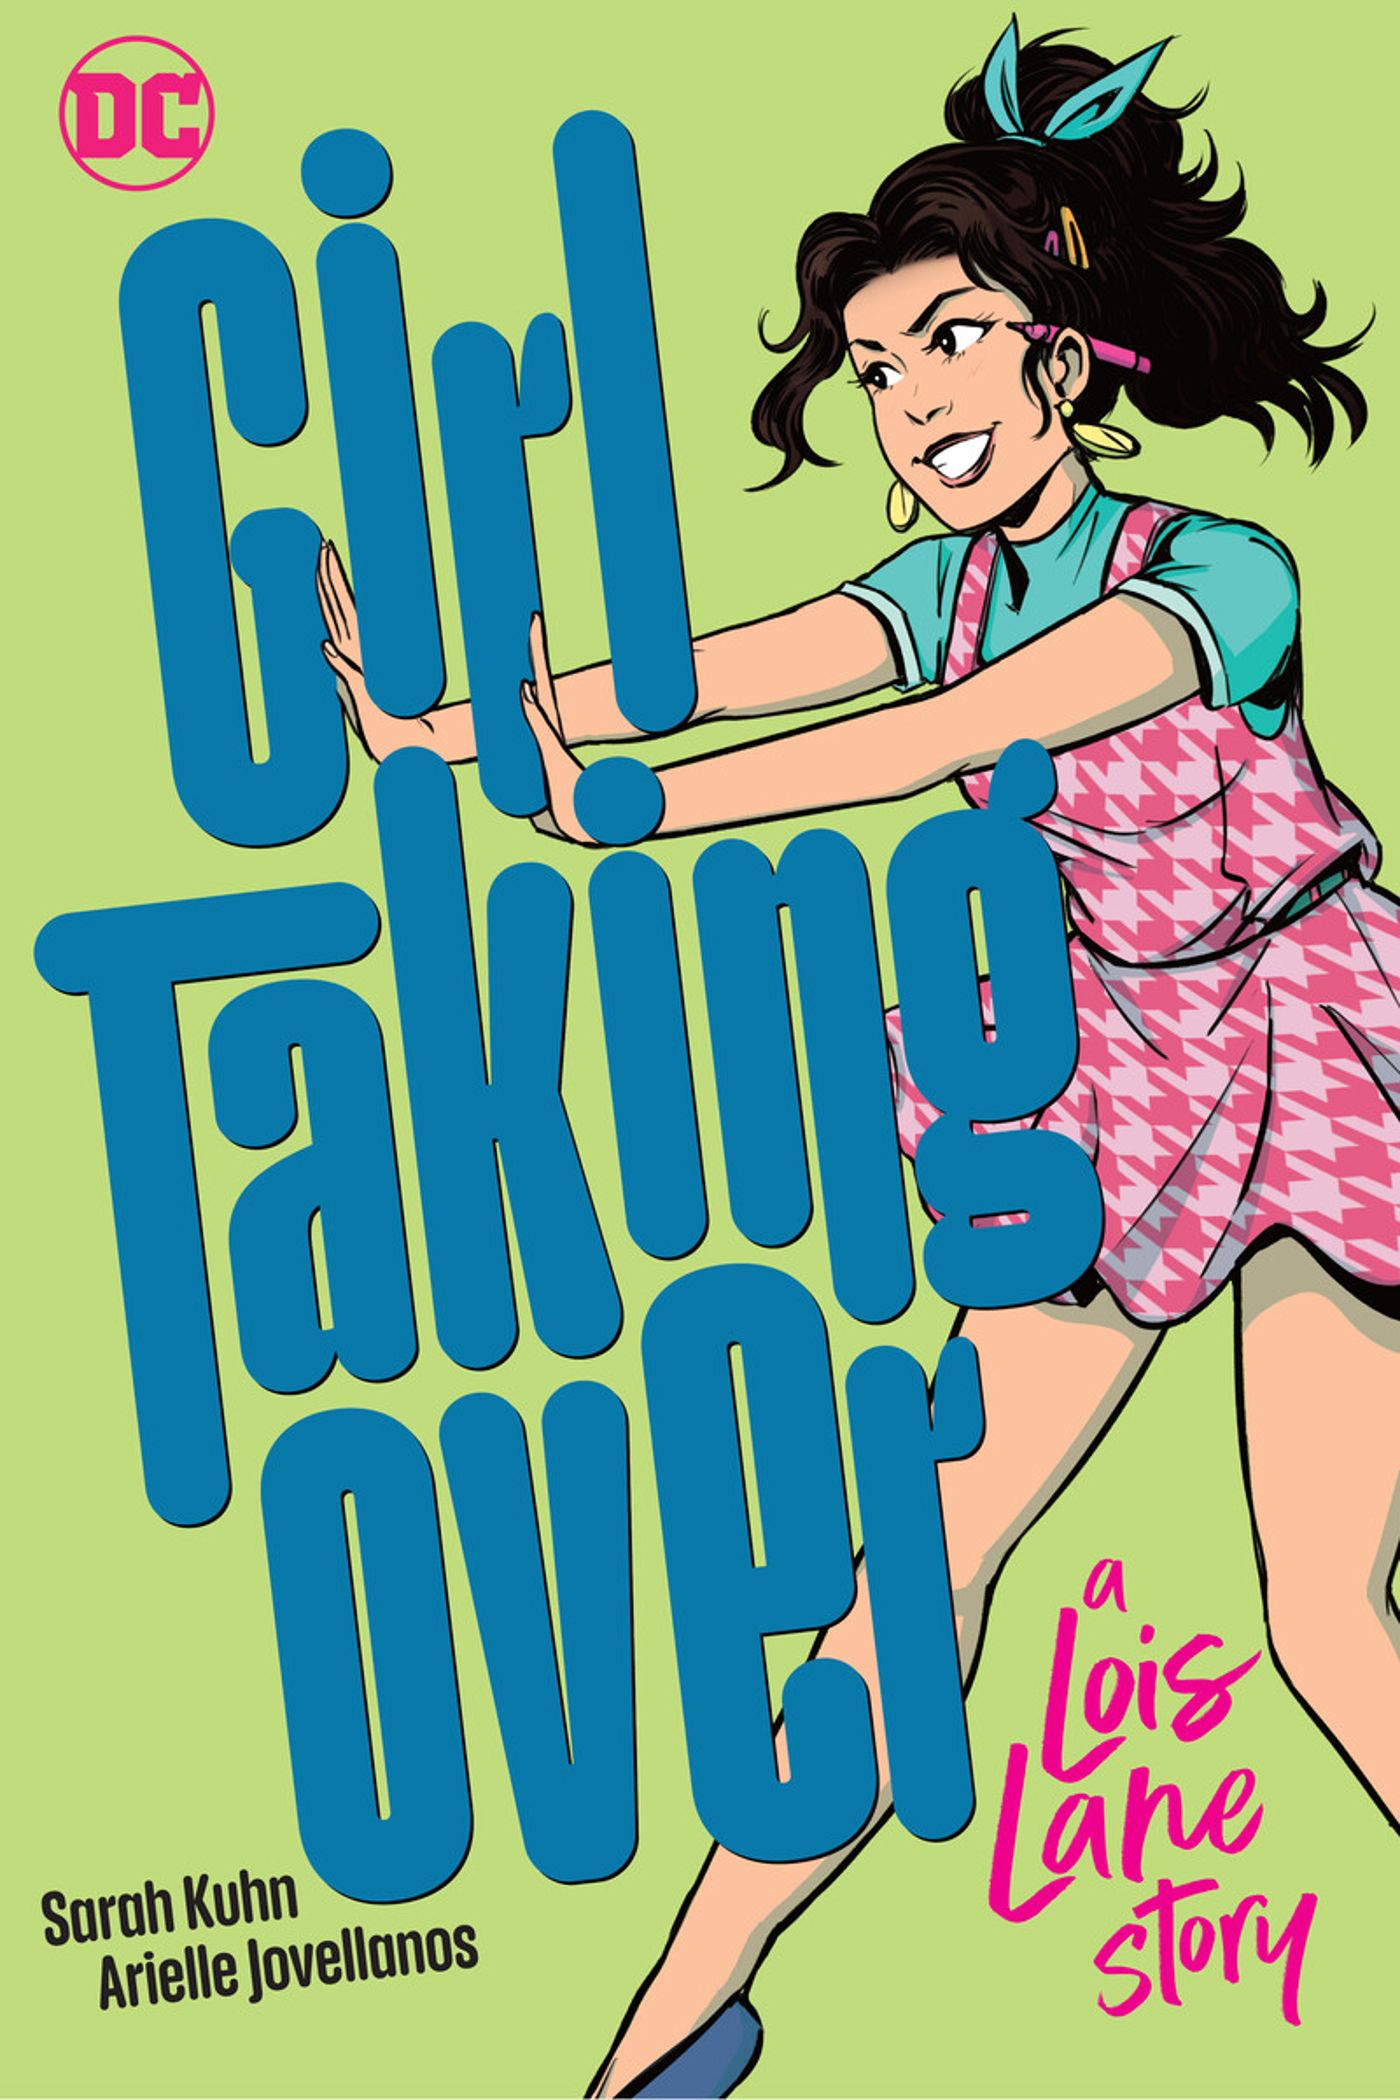 Lois Lane's new YA Book, Taking Over